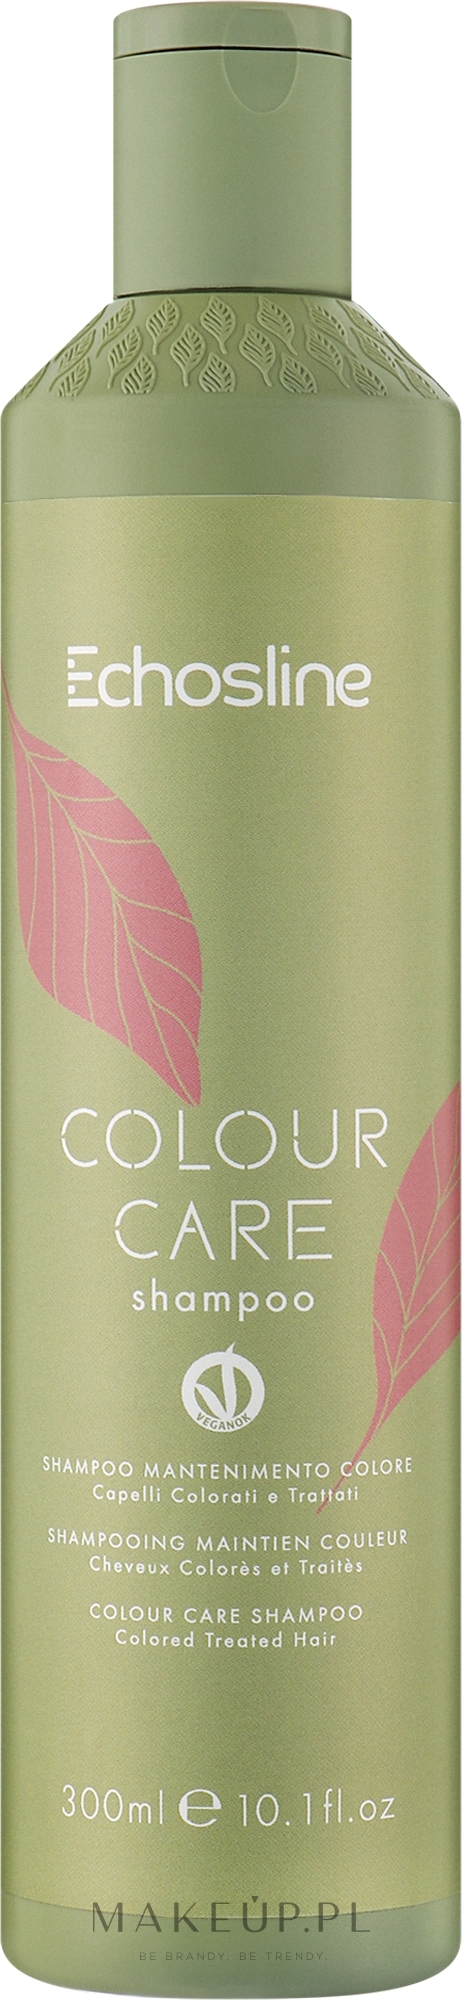 Szampon do włosów farbowanych - Echosline Colour Care Shampoo for Colored and Treated Hair — Zdjęcie 300 ml